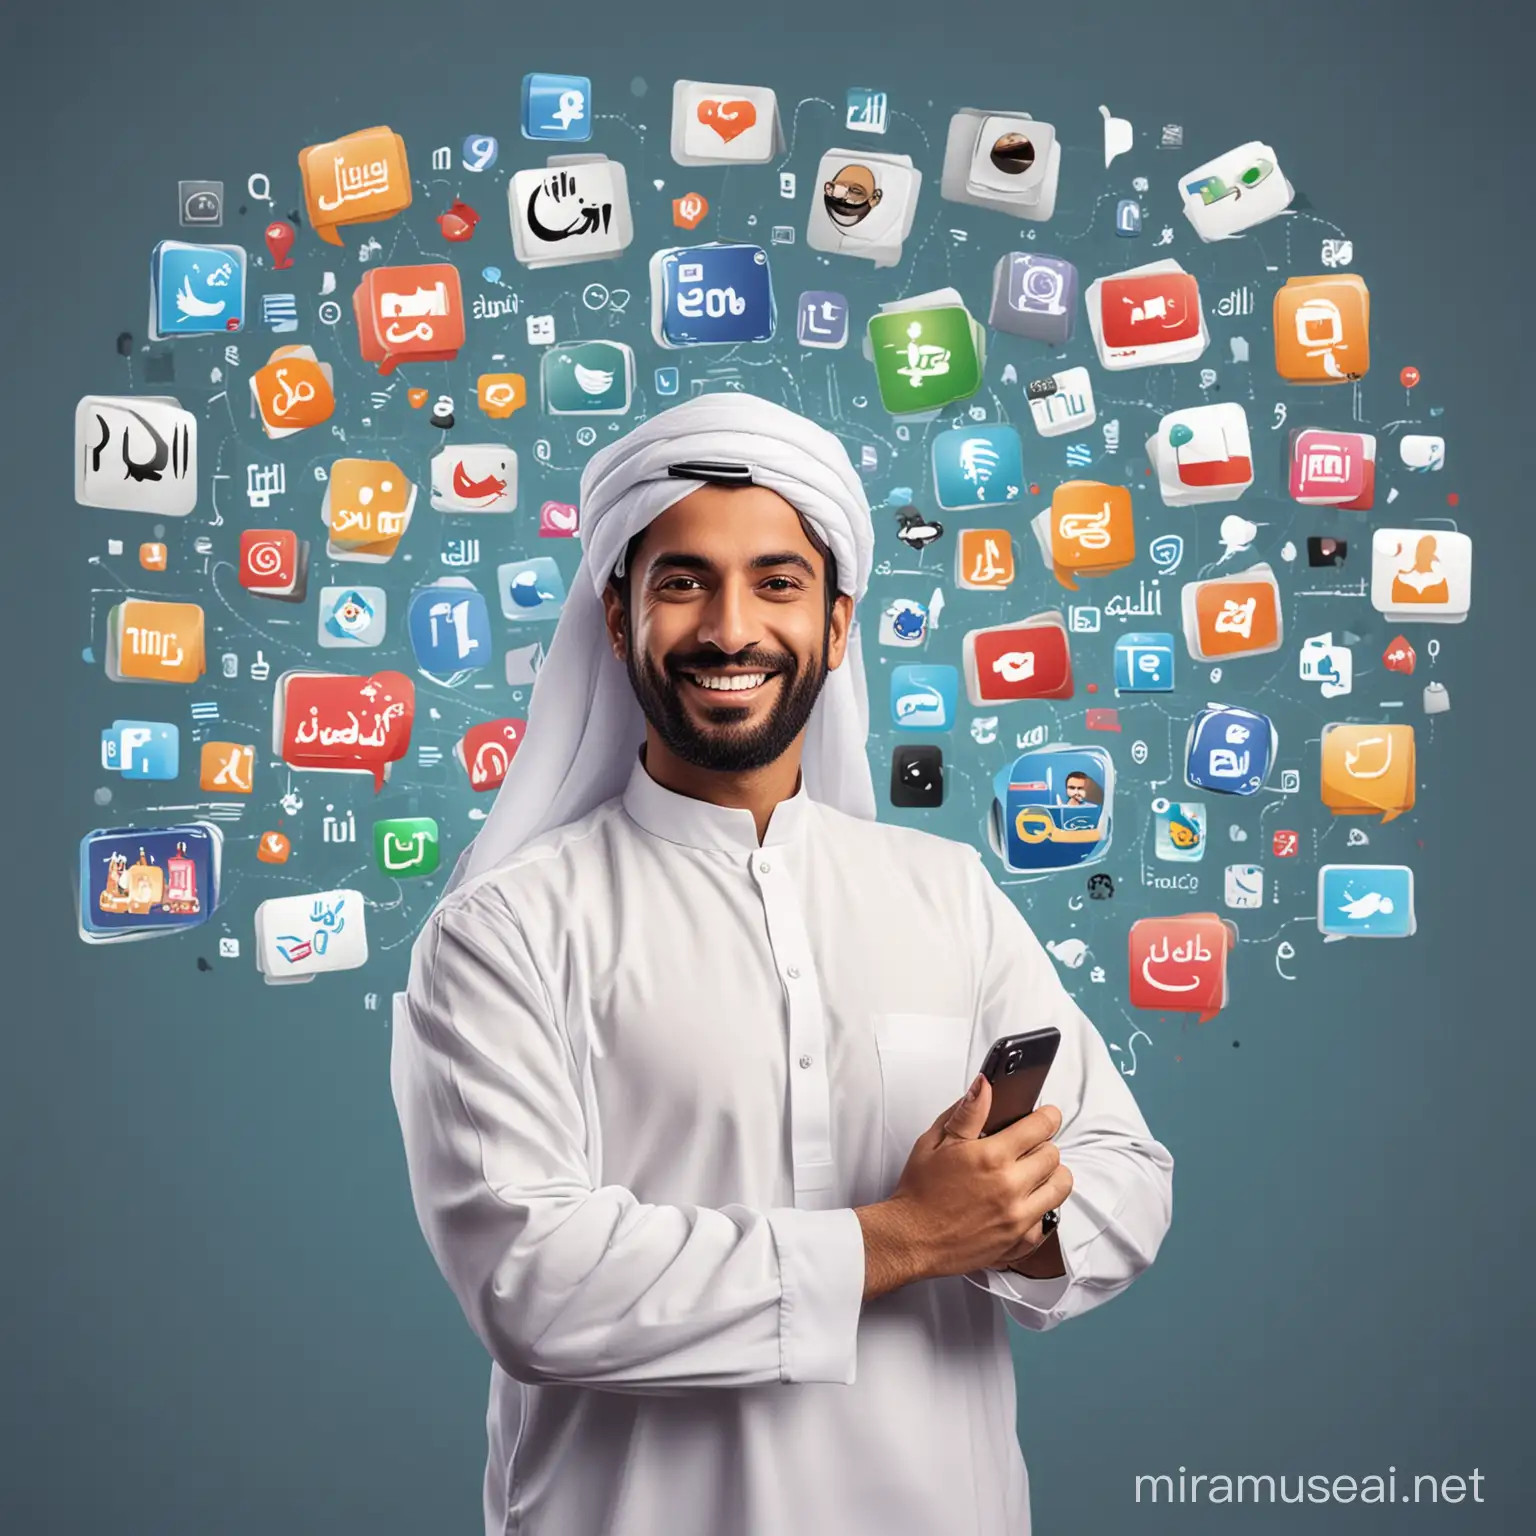 Arabic Man in Kandora Poses with Social Media Icons in Dubai